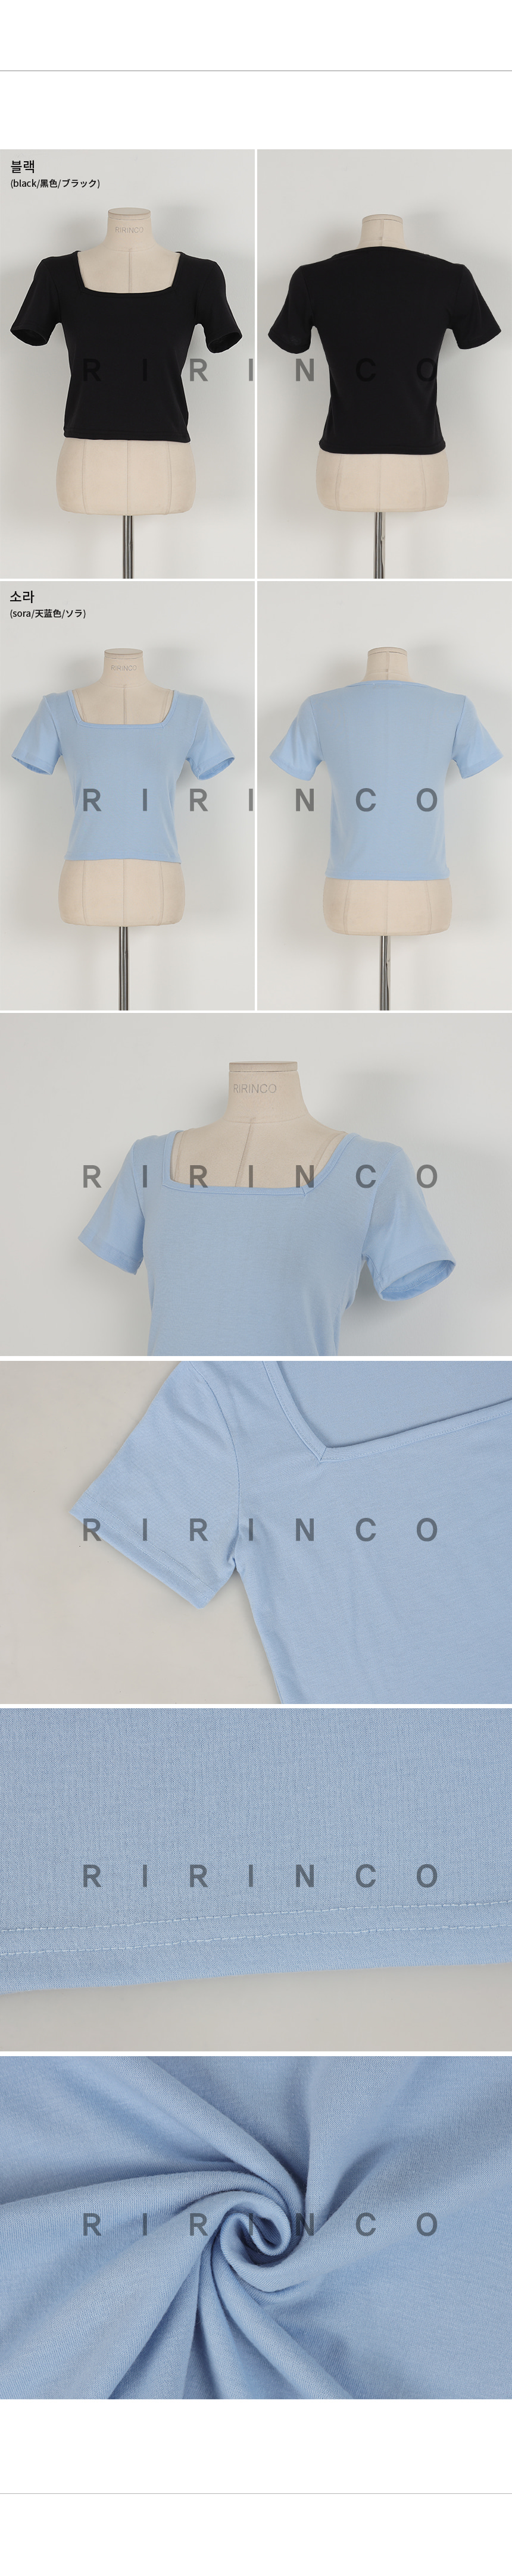 RIRINCO スクエアネックスリムフィット半袖Tシャツ